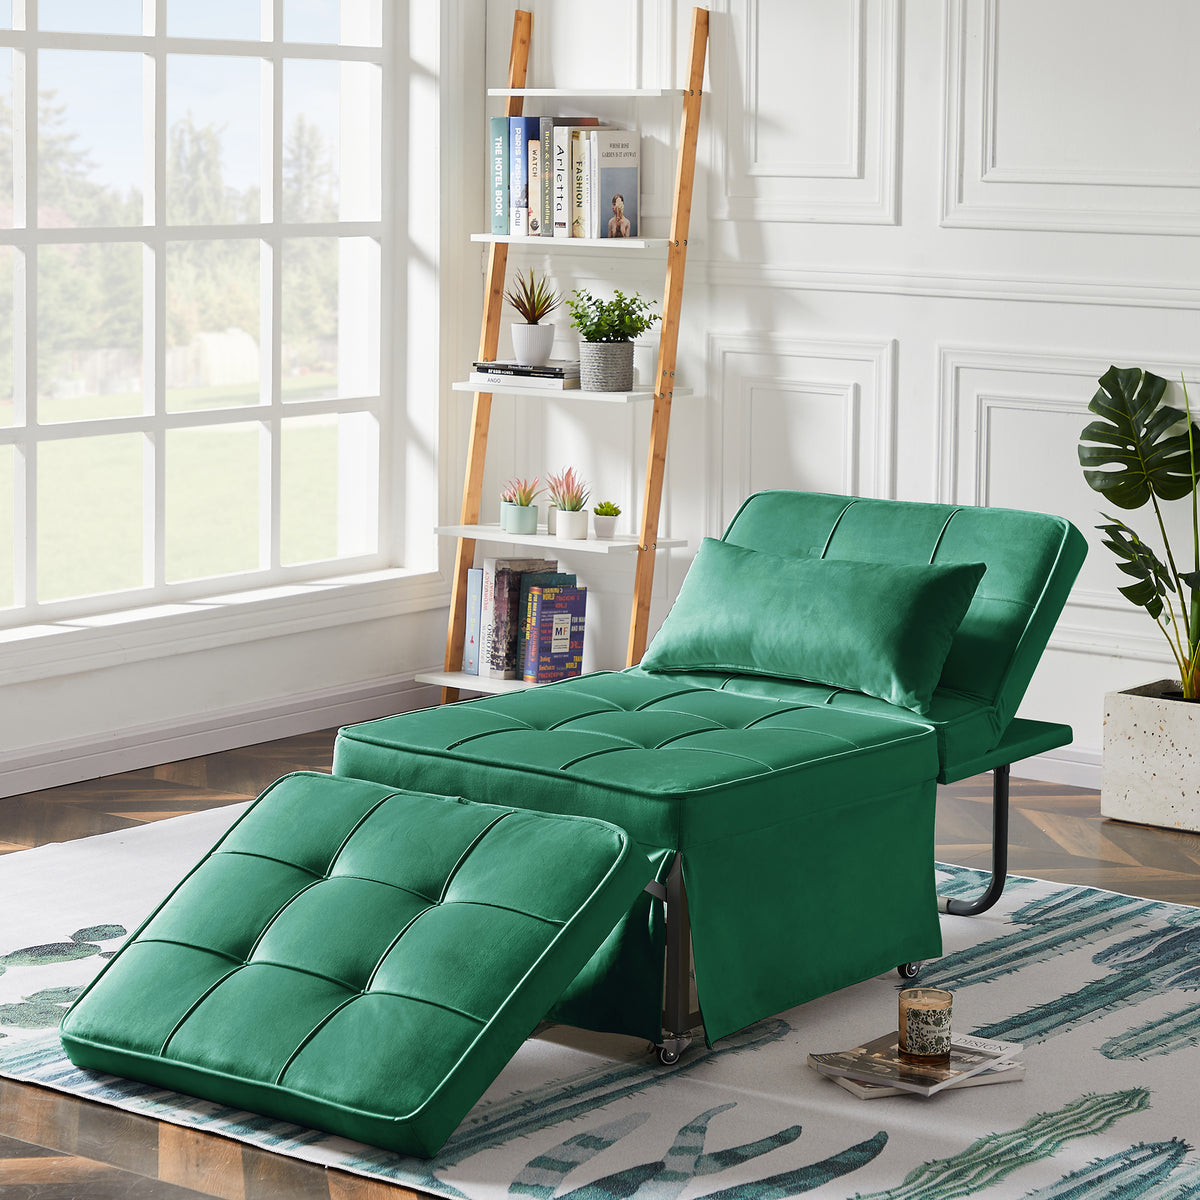 4 in 1 Folding Sleeper Sofa Bed w/ Adjustable Backrest & Pillow, No Armrest, Green